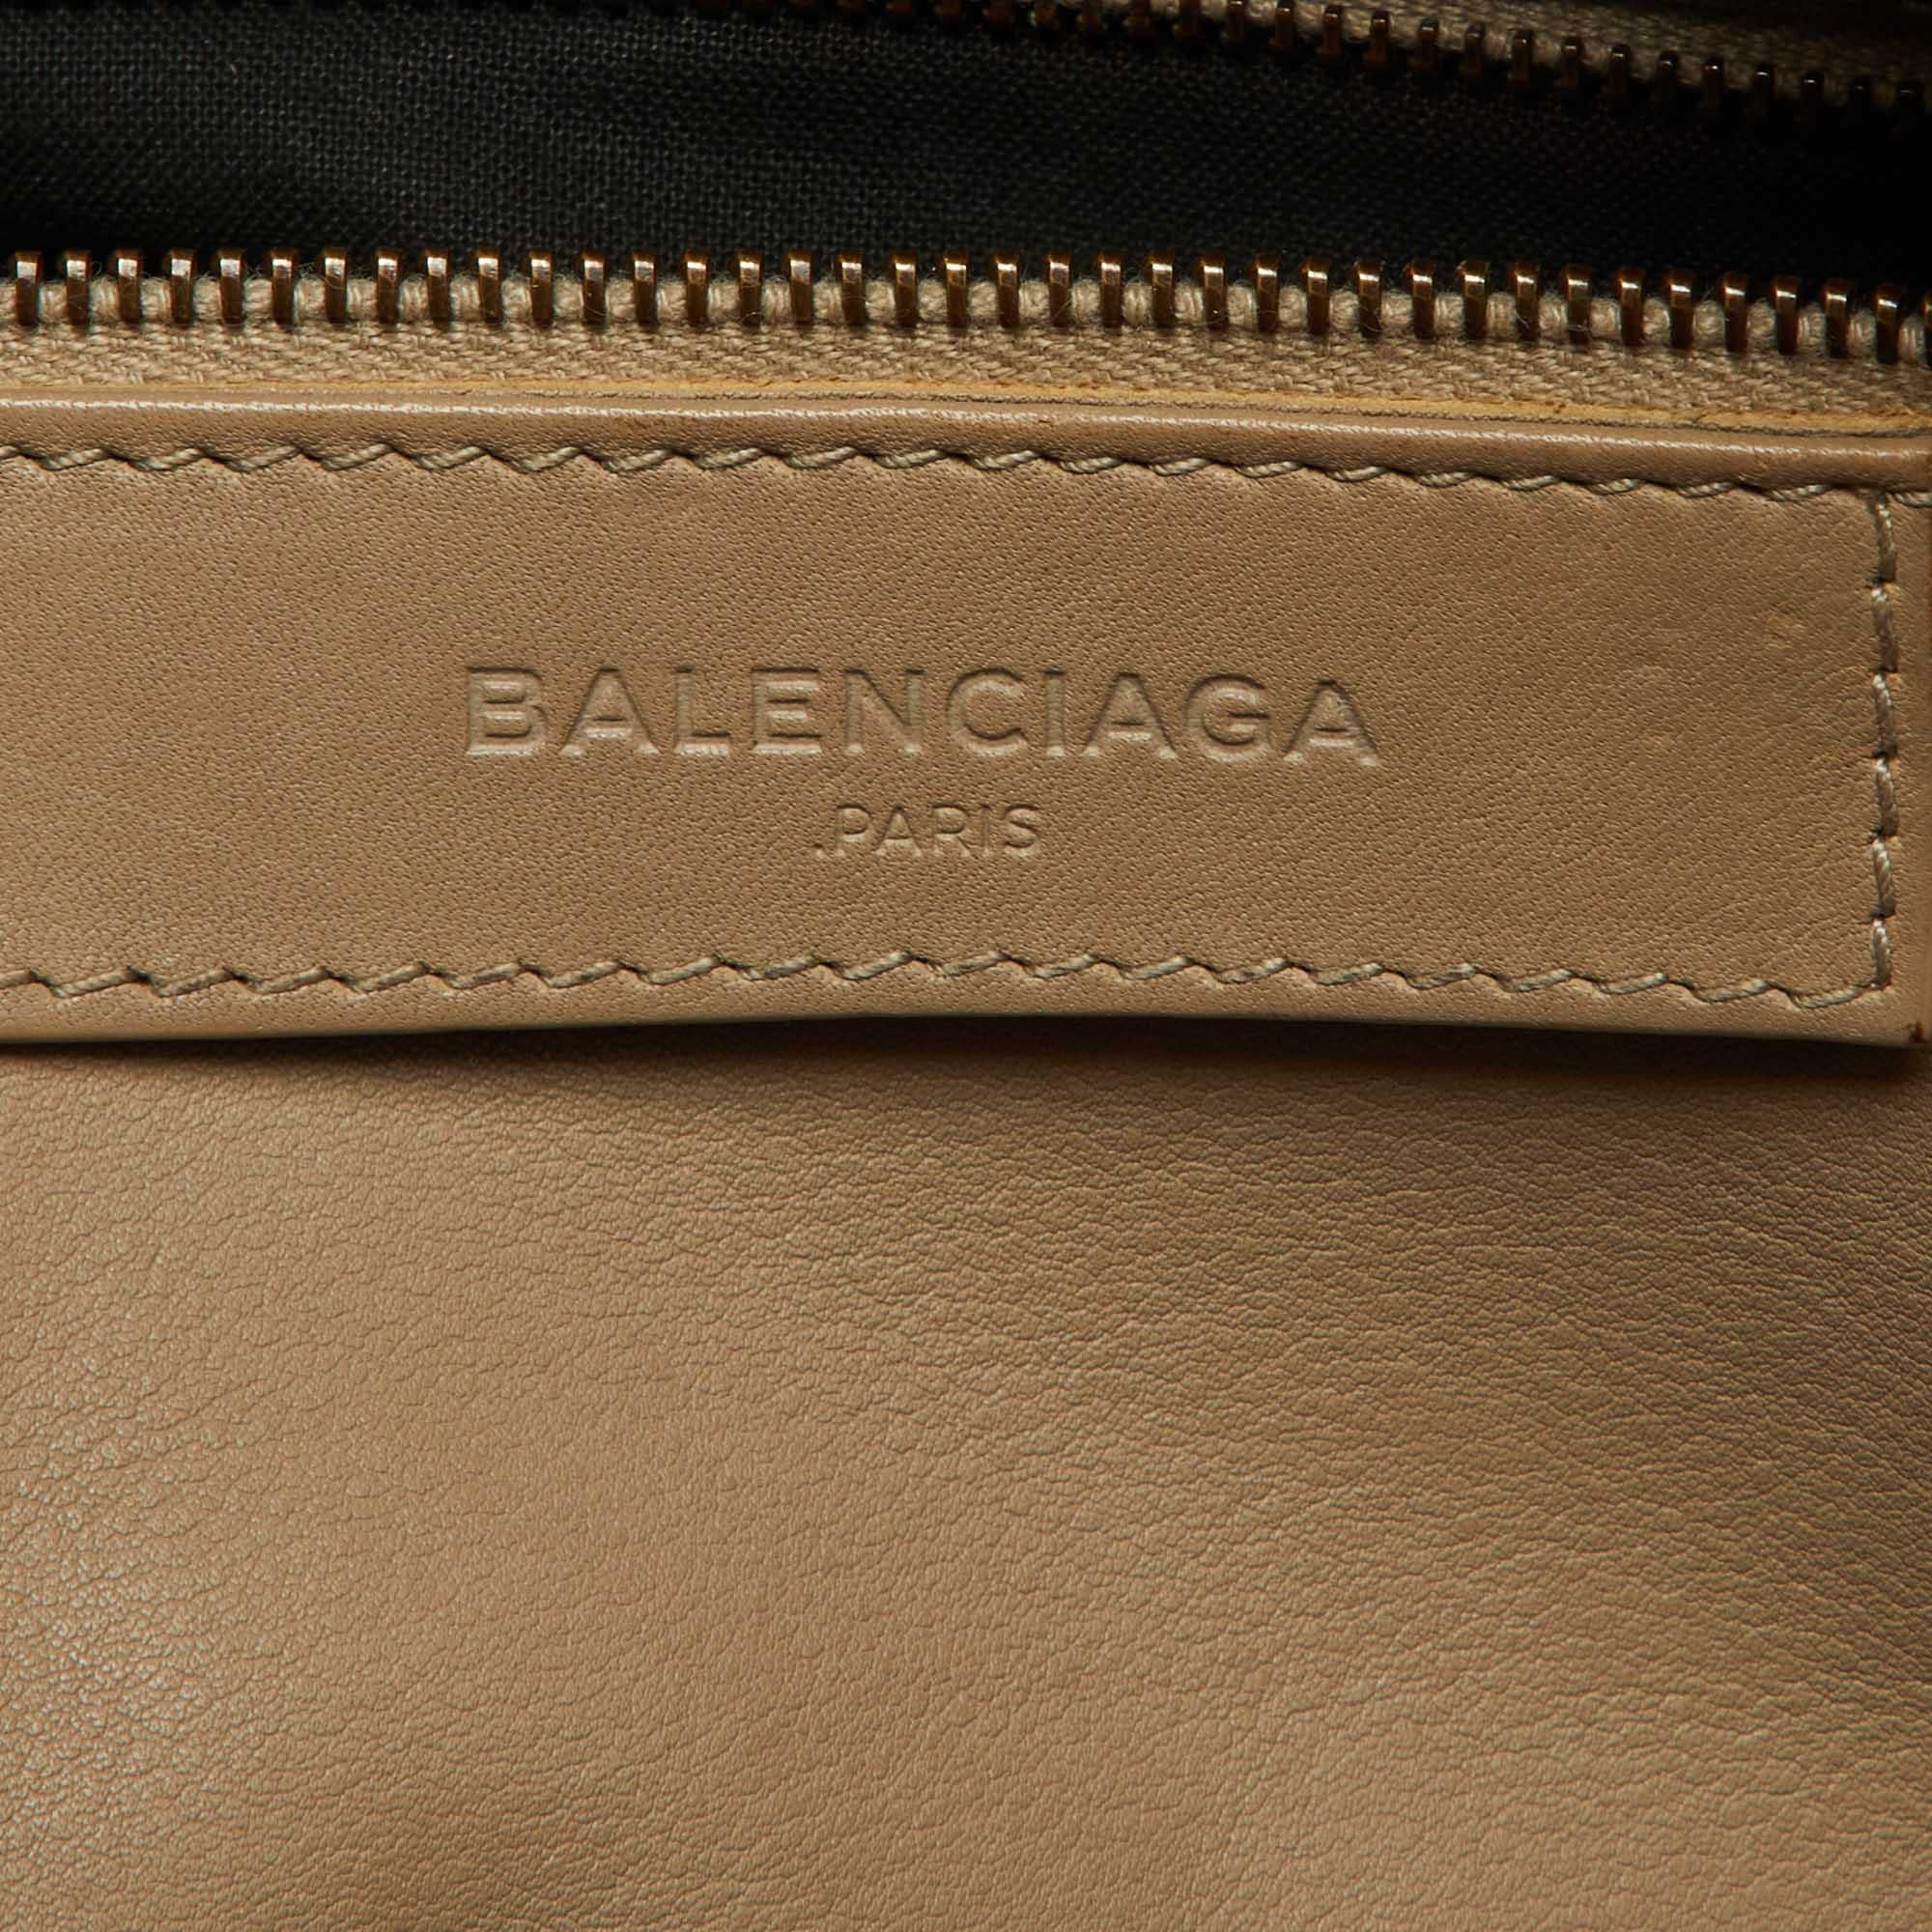 Balenciaga Gris Glace Leather Blackout Classic City Bag For Sale 4